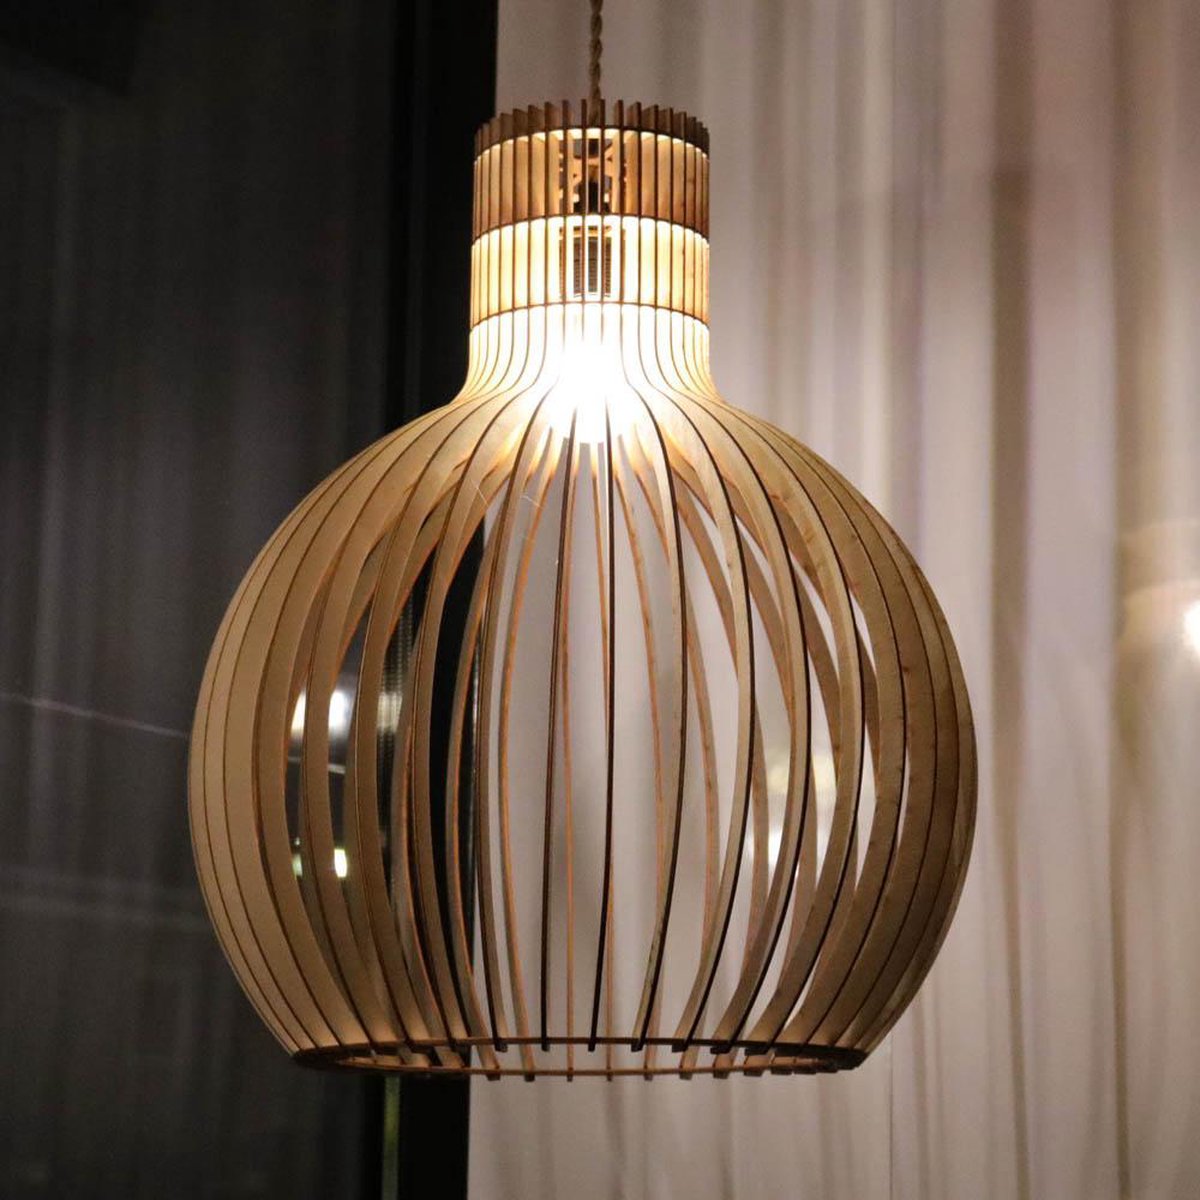 Houten lamp - Grote bolvormige hanglamp